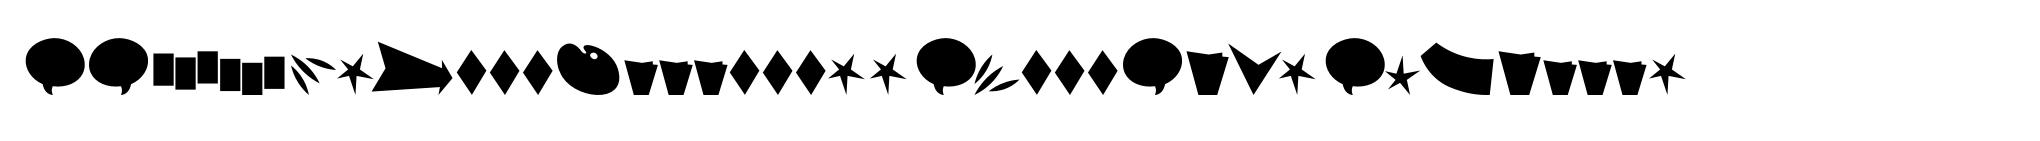 Signsurfers Script Shapes image